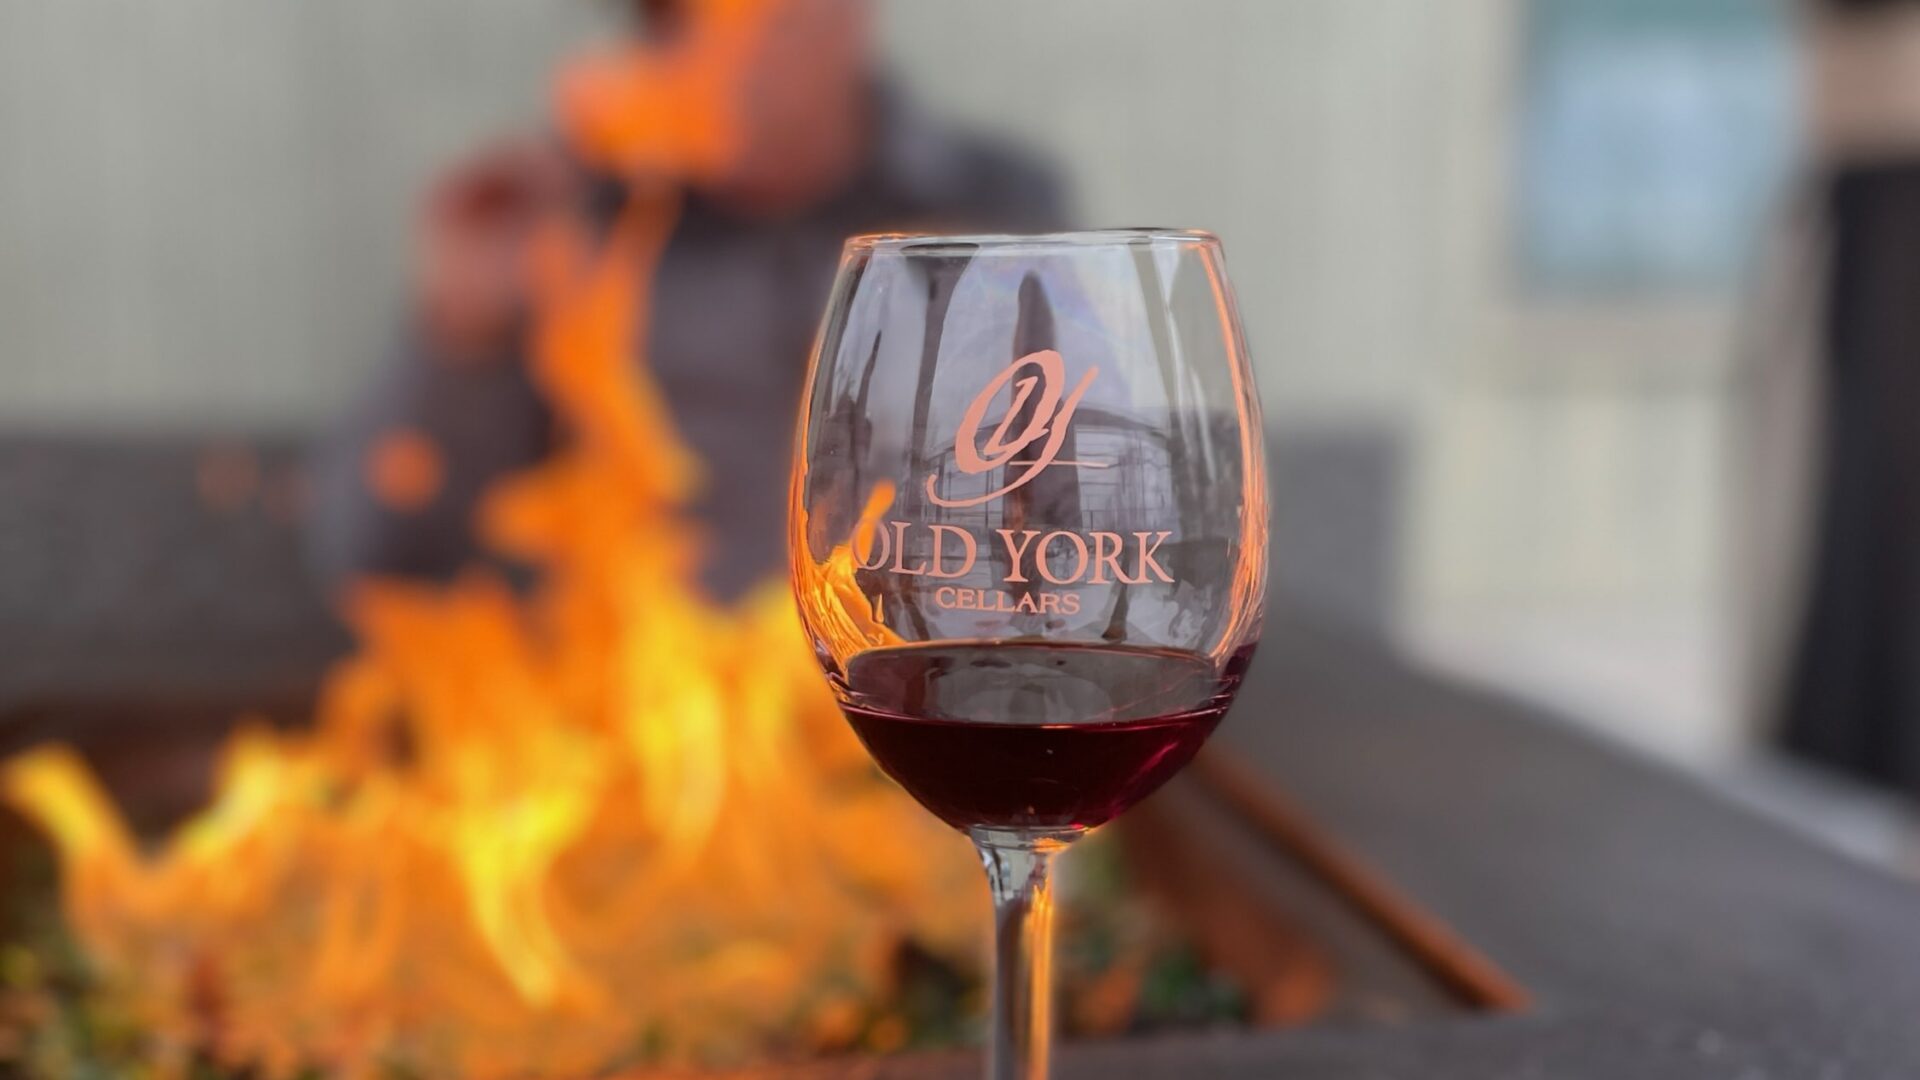 Fireside wine tasting at Old York Cellars